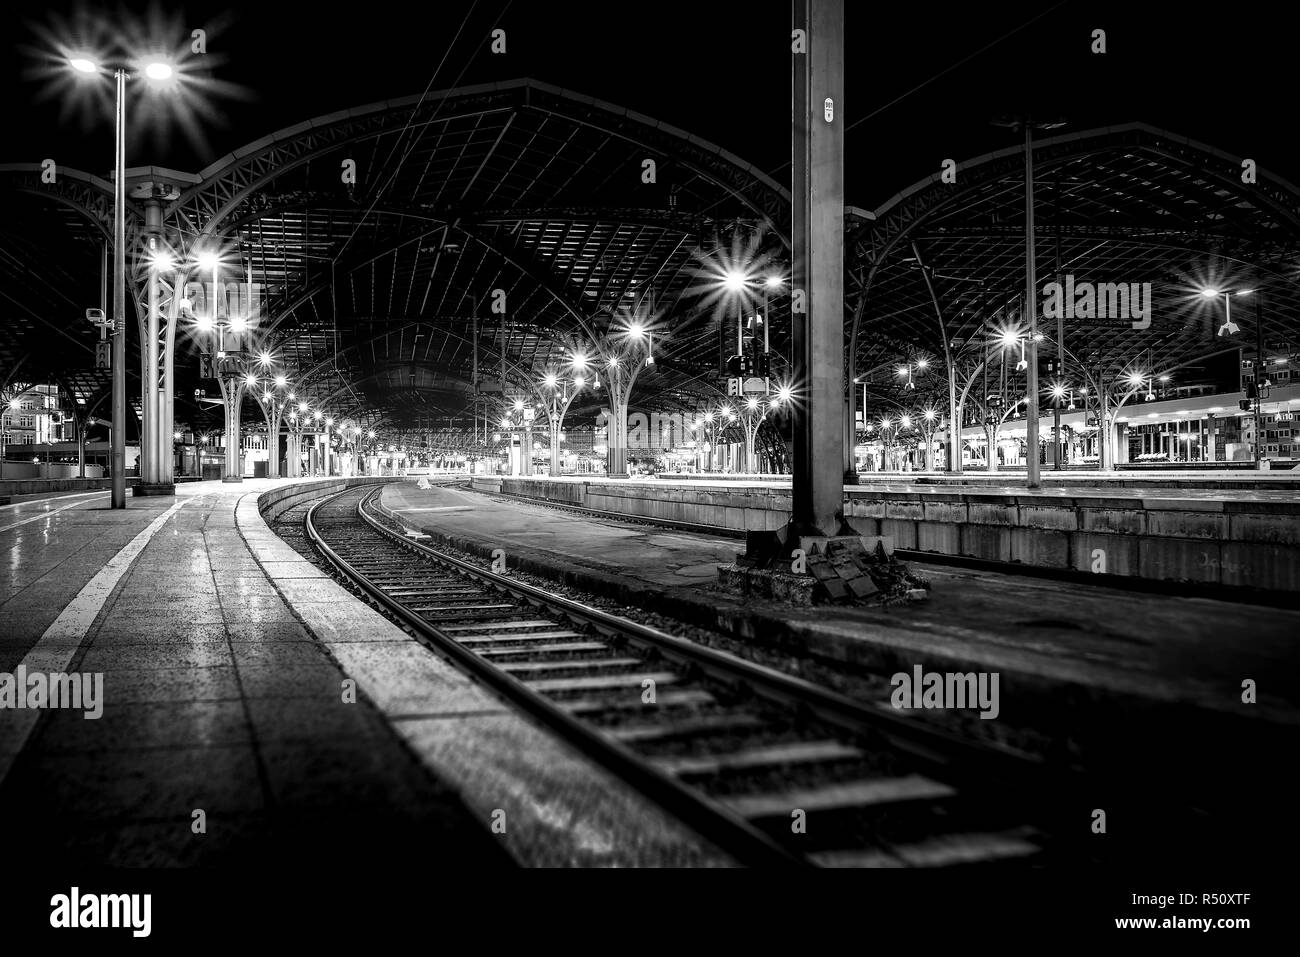 night shot on a platform Stock Photo